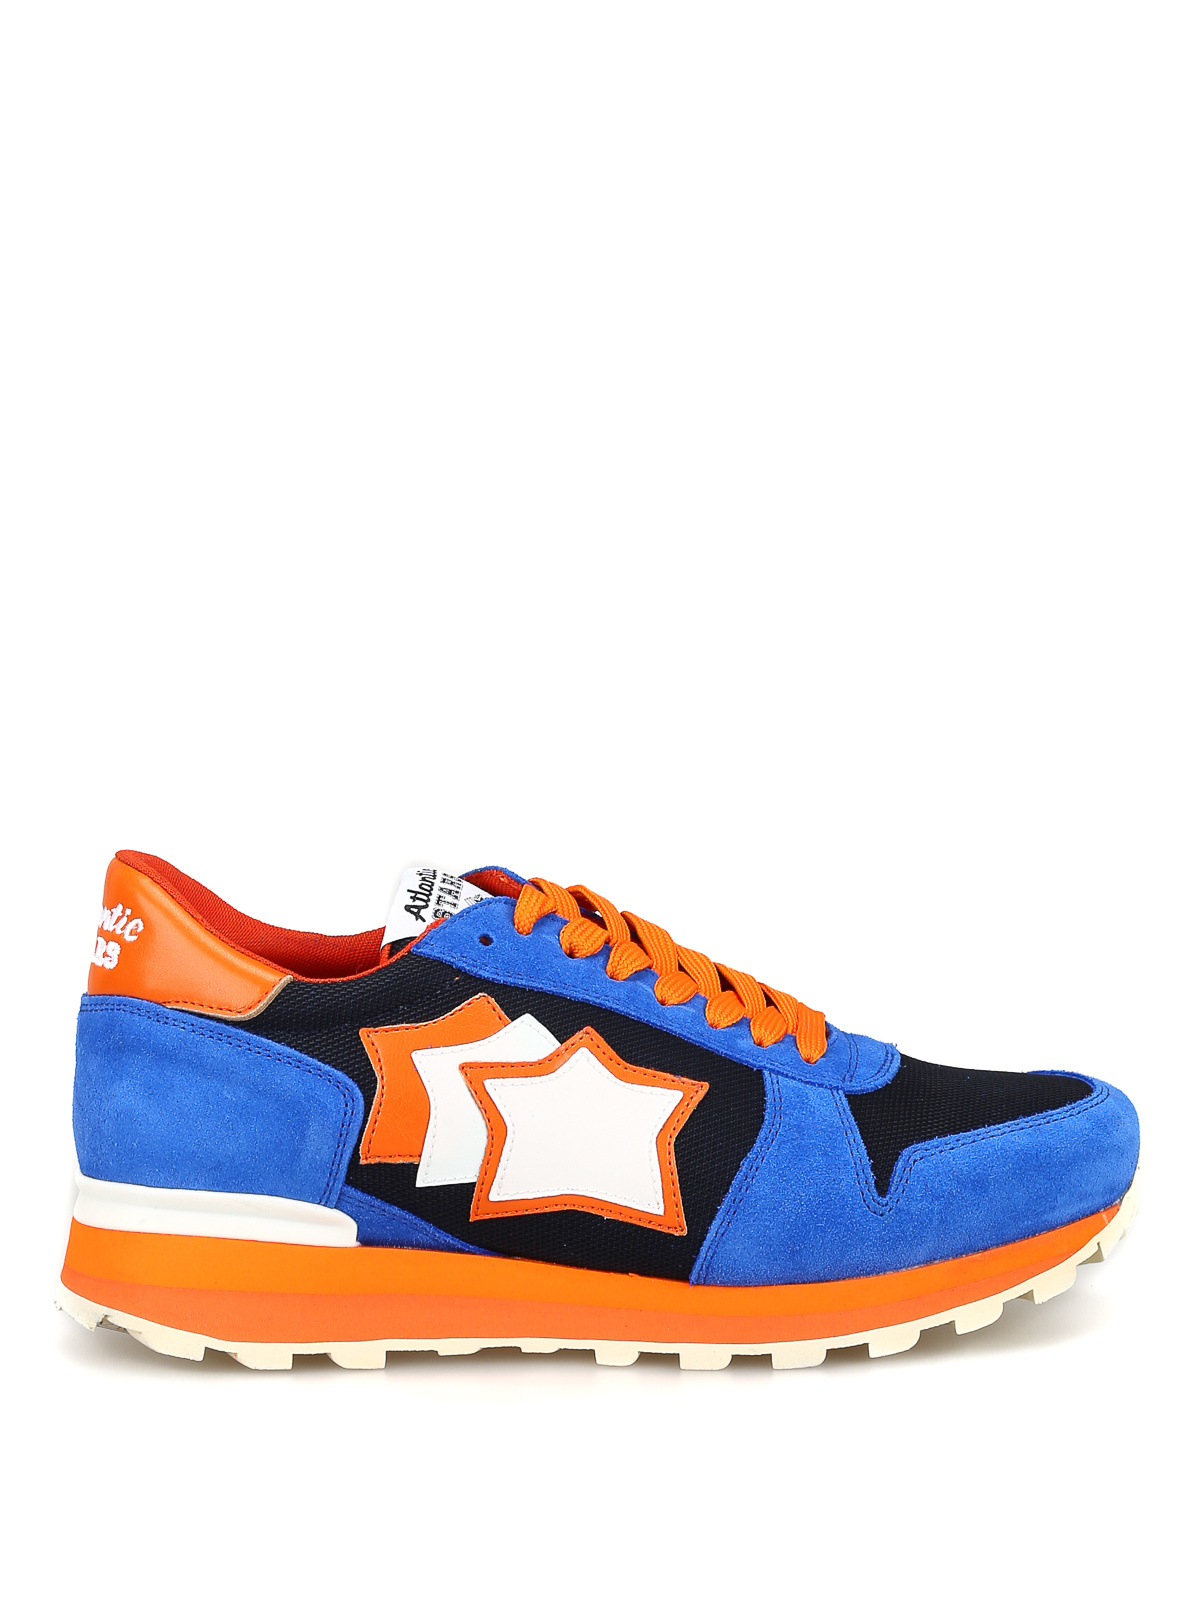 Atlantic Stars - Sneaker Sirius blu e arancio - sneakers -  SIRIUSCNAPRLAABE013